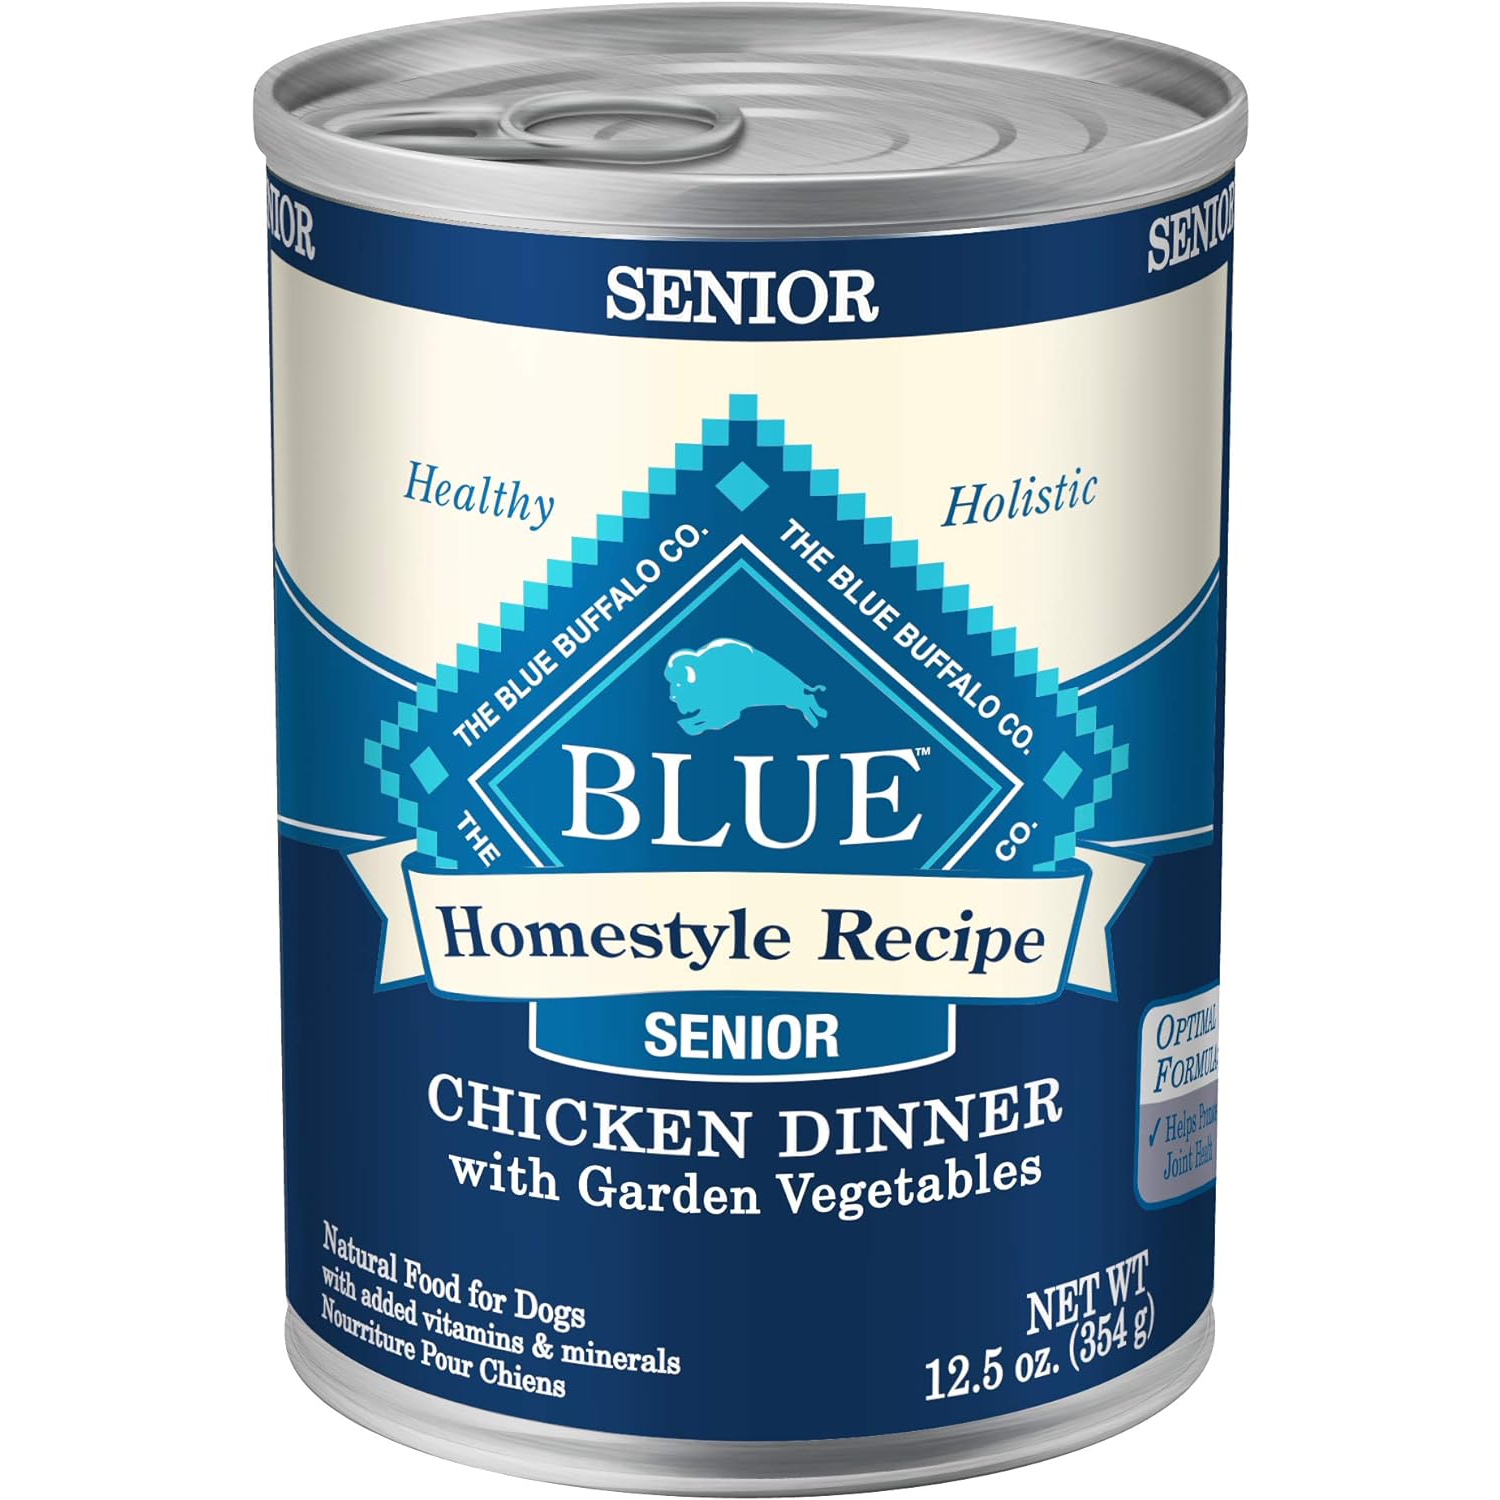 New Project Blue Buffalo Homestyle Recipe Natural Senior Wet Dog Food 